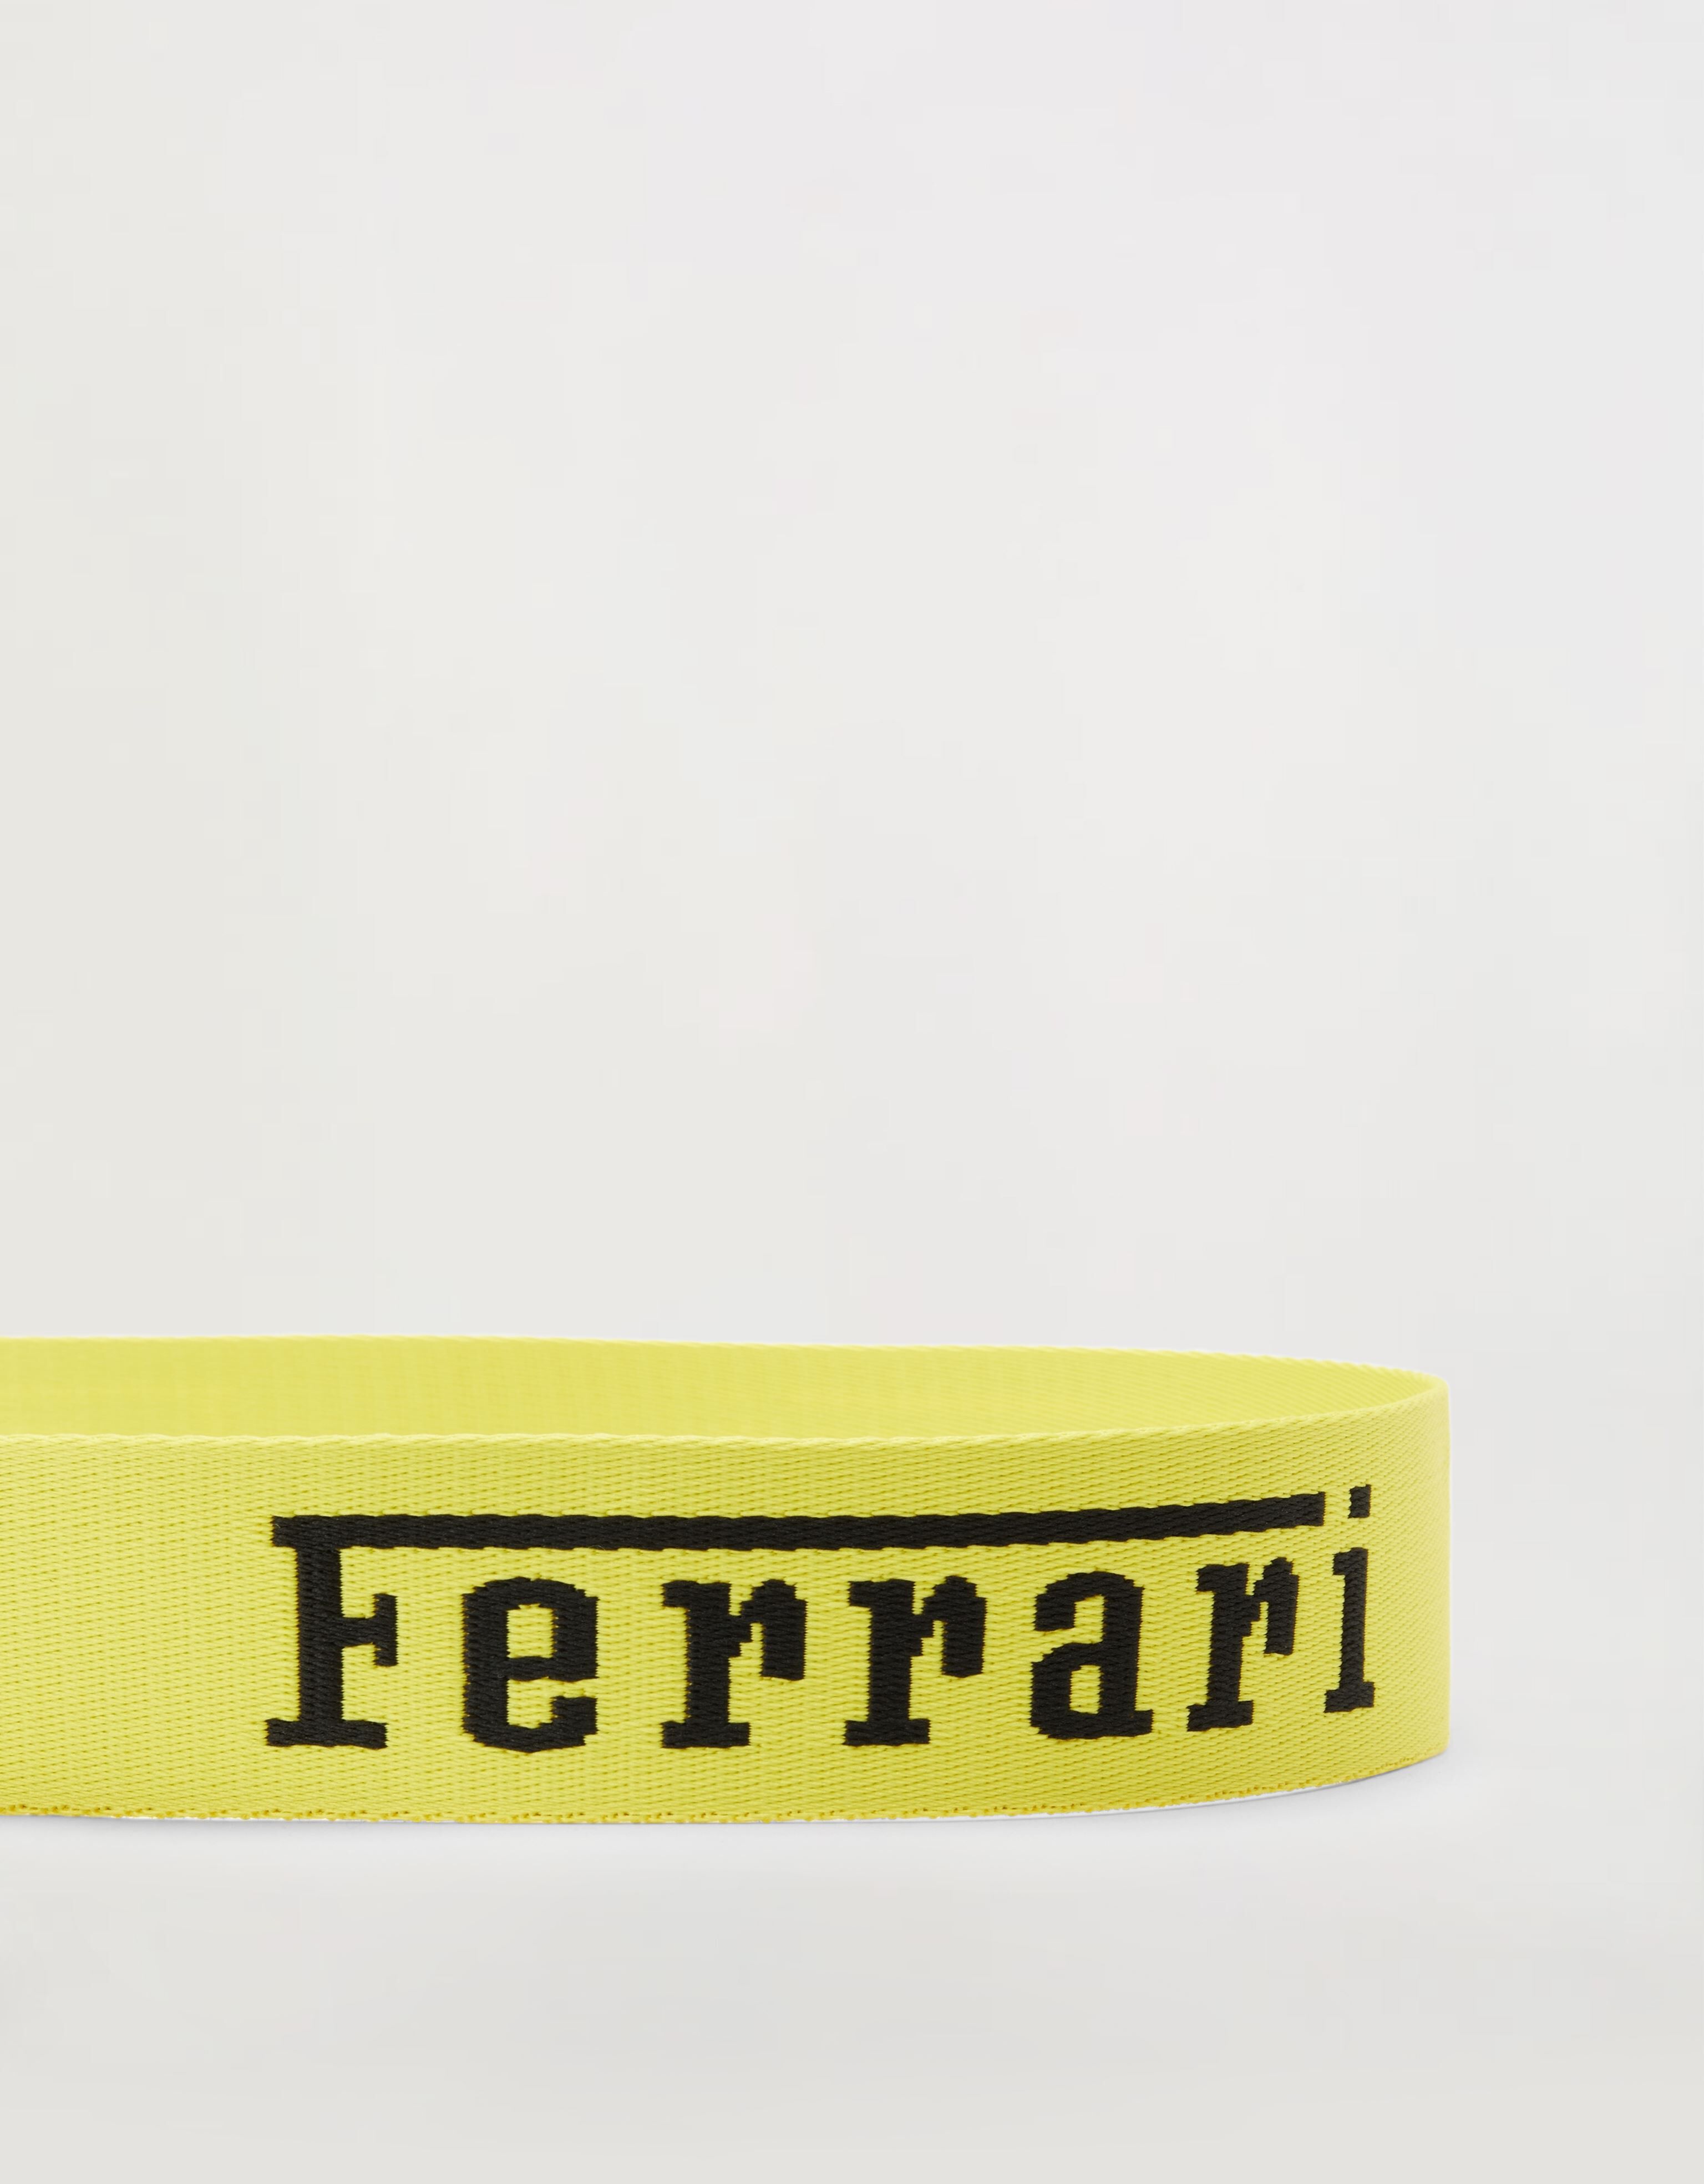 Ferrari 法拉利徽标饰带腰带 黄色 20017f